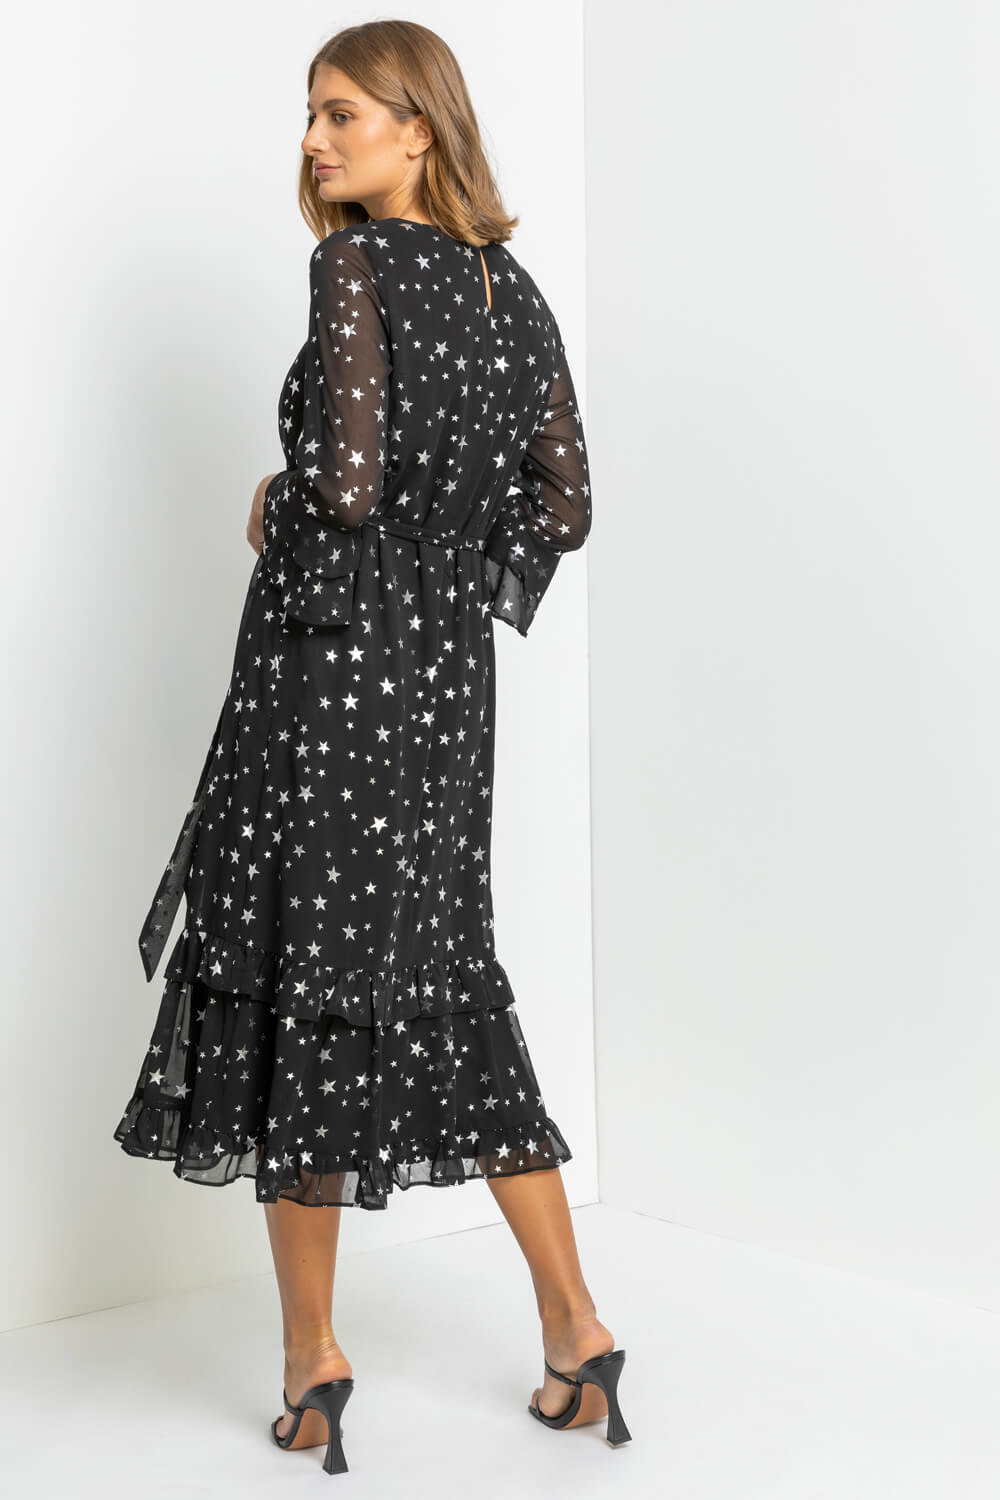 Black Star Foil Print Frill Dress, Image 2 of 5